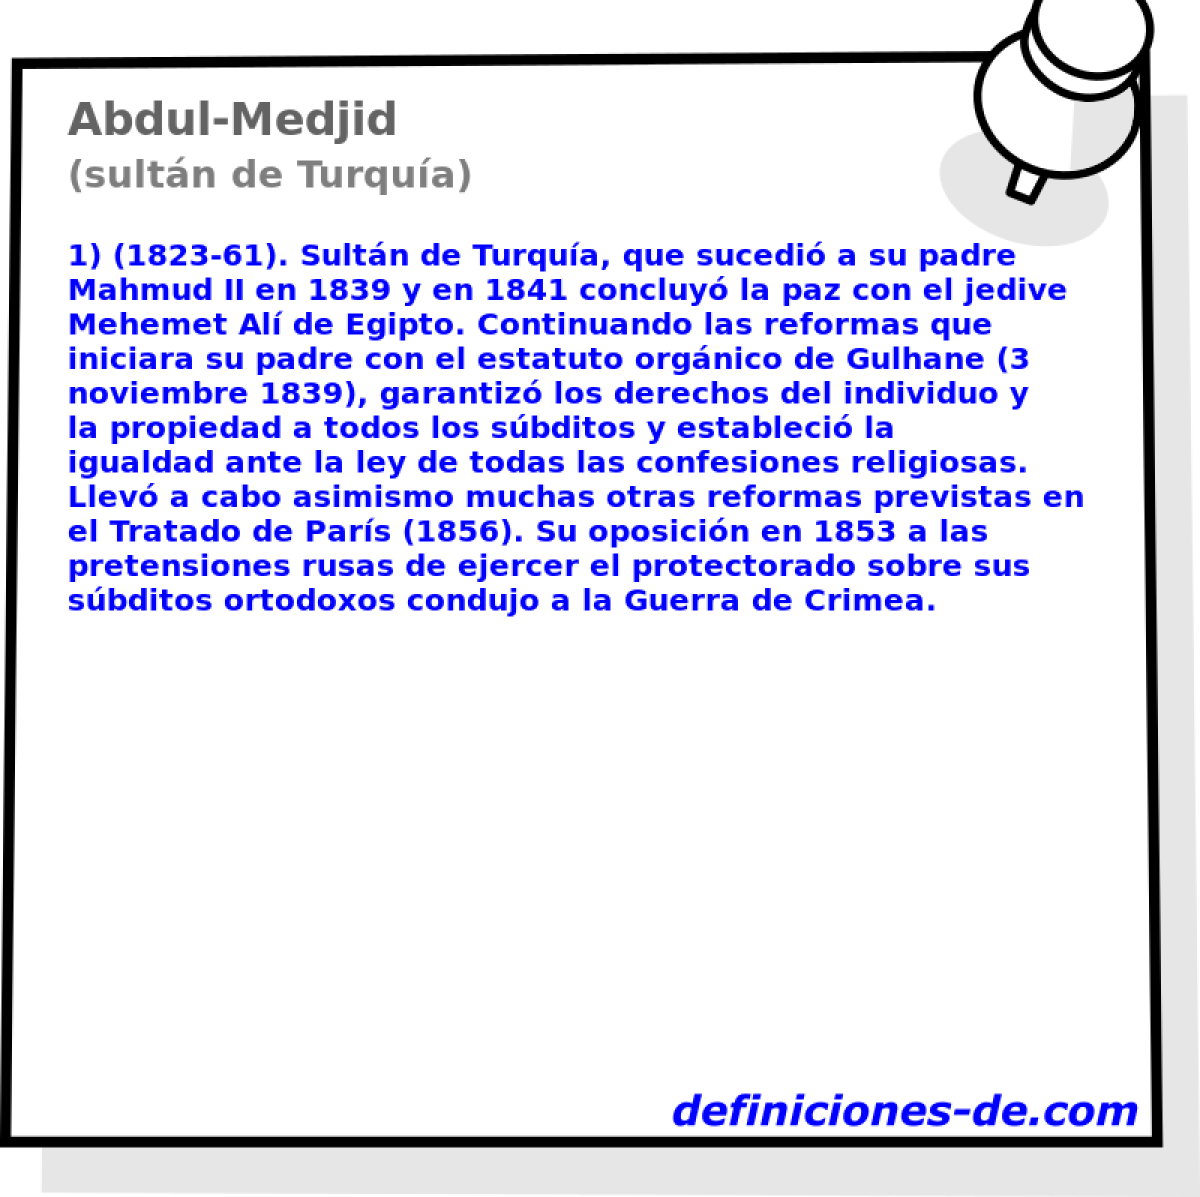 Abdul-Medjid (sultn de Turqua)